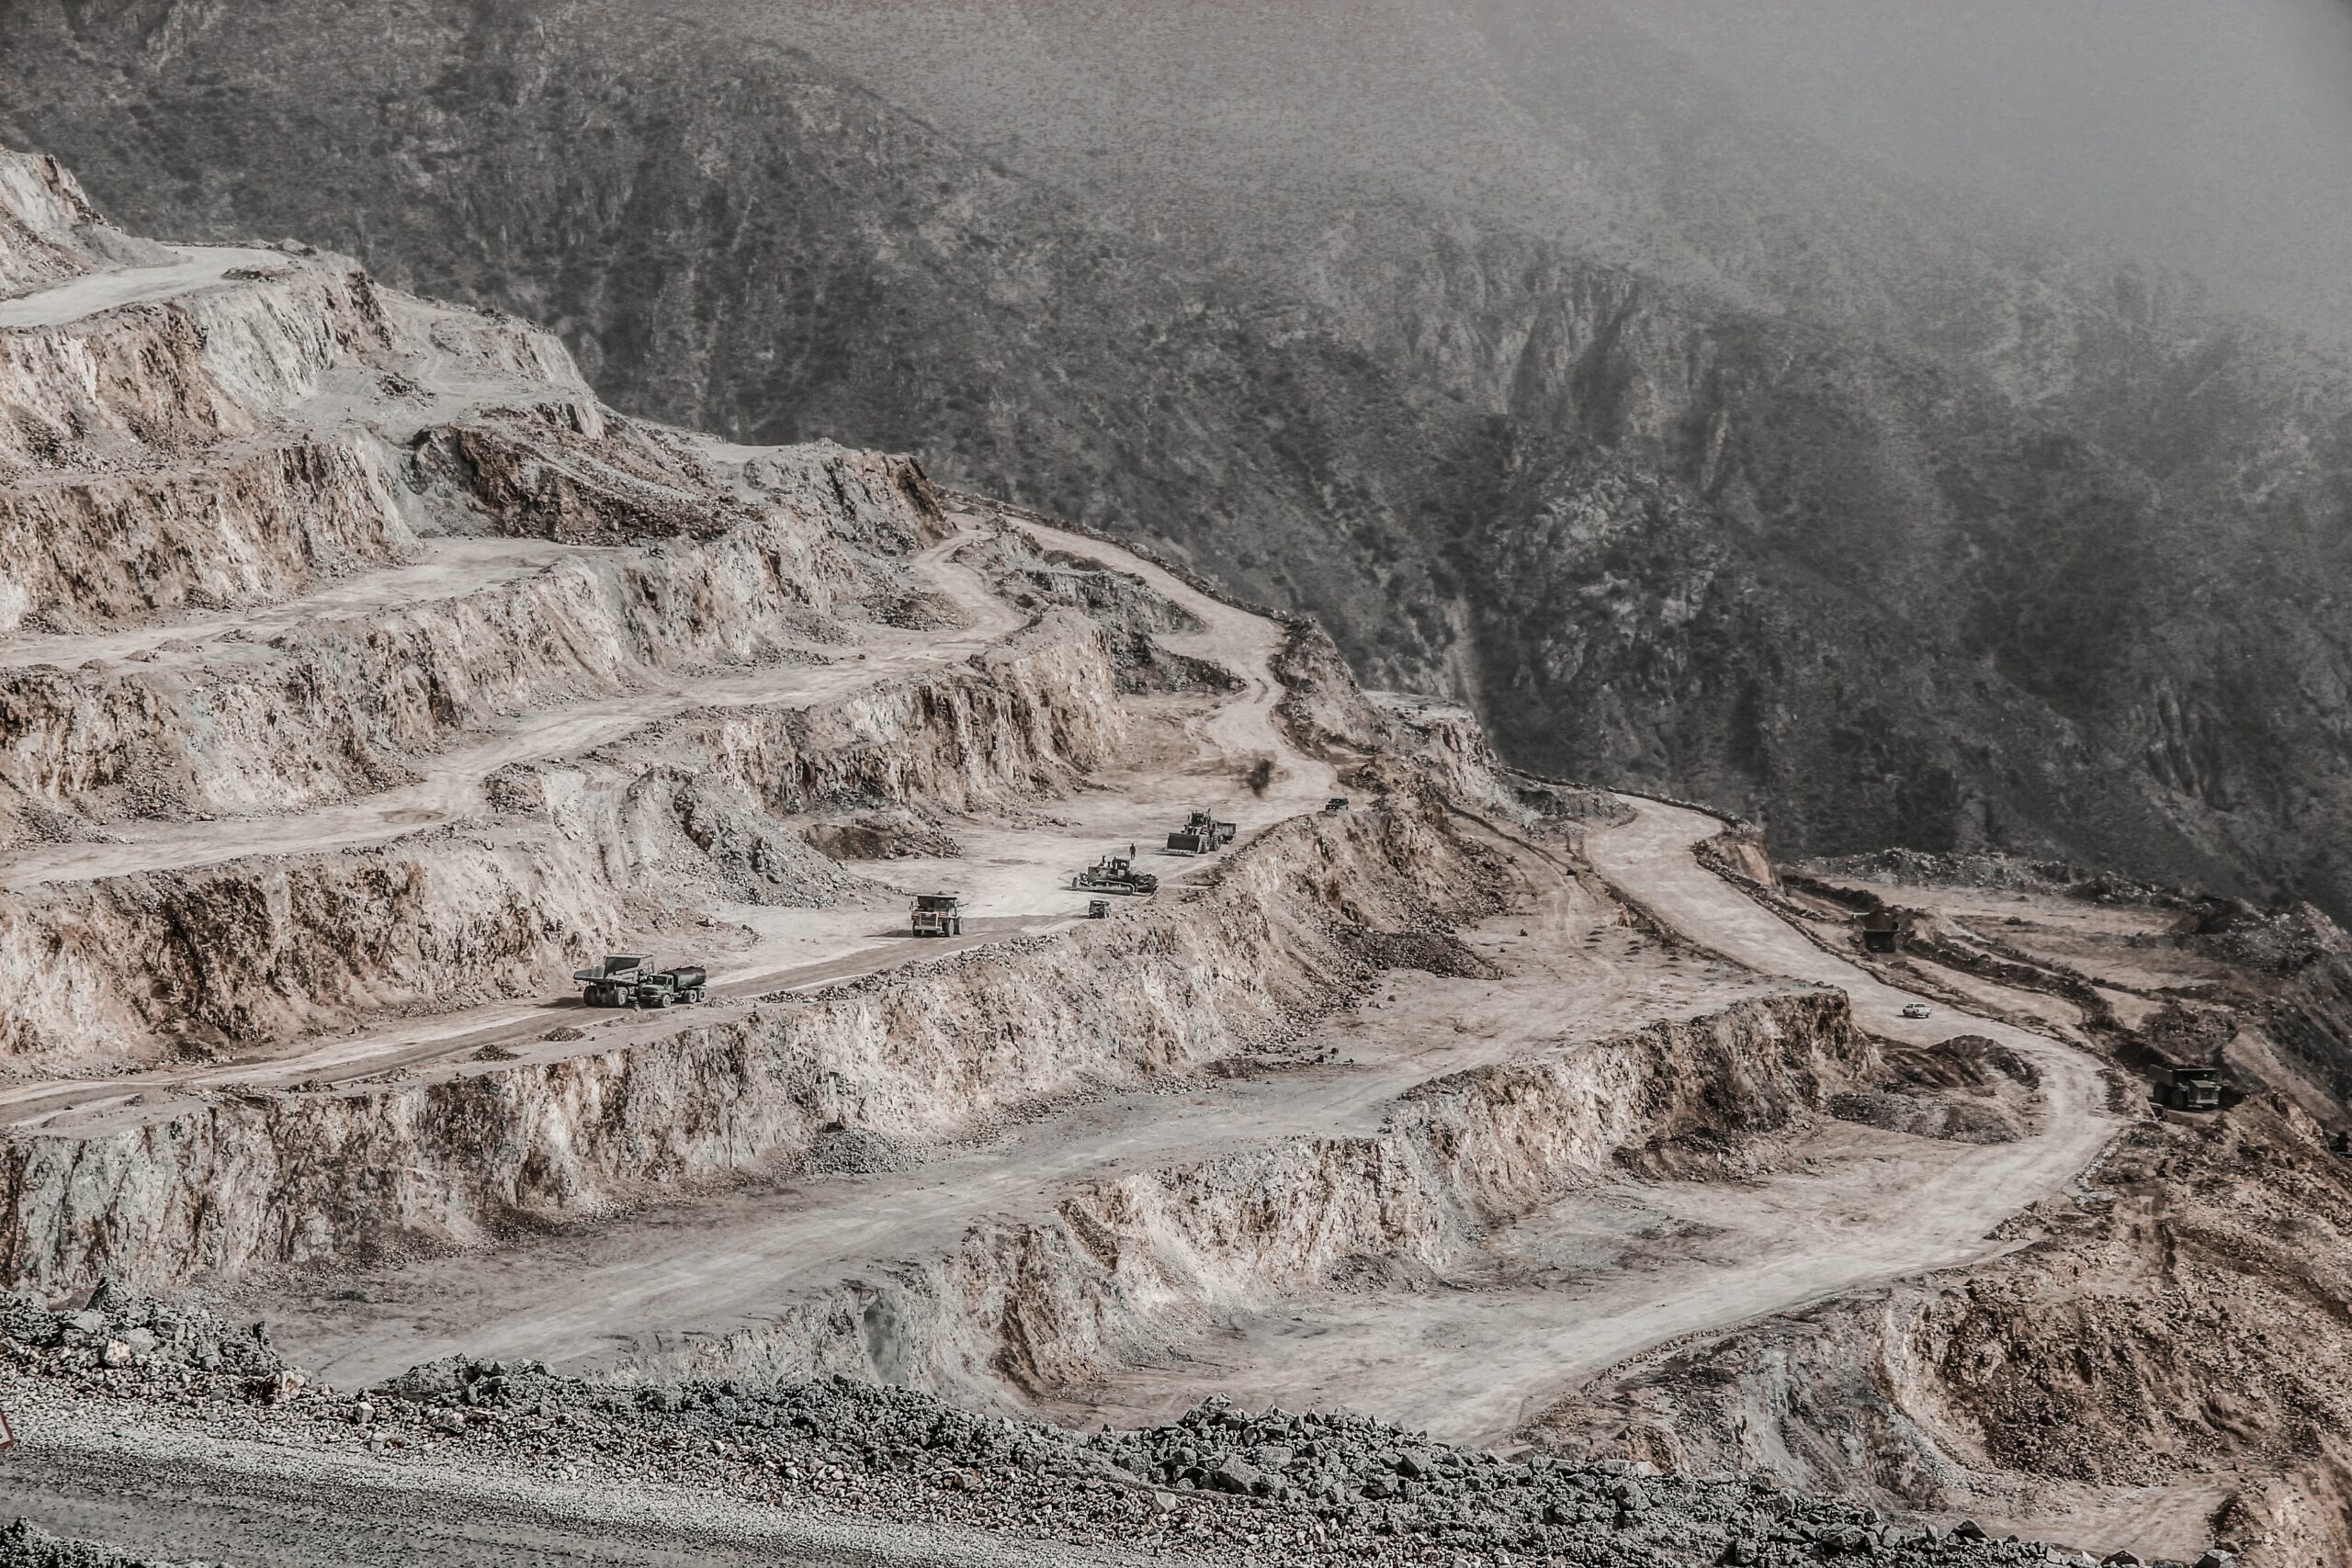 Image for website, by Omid Roshan (Unsplash), Mining in Tabriz, Iran